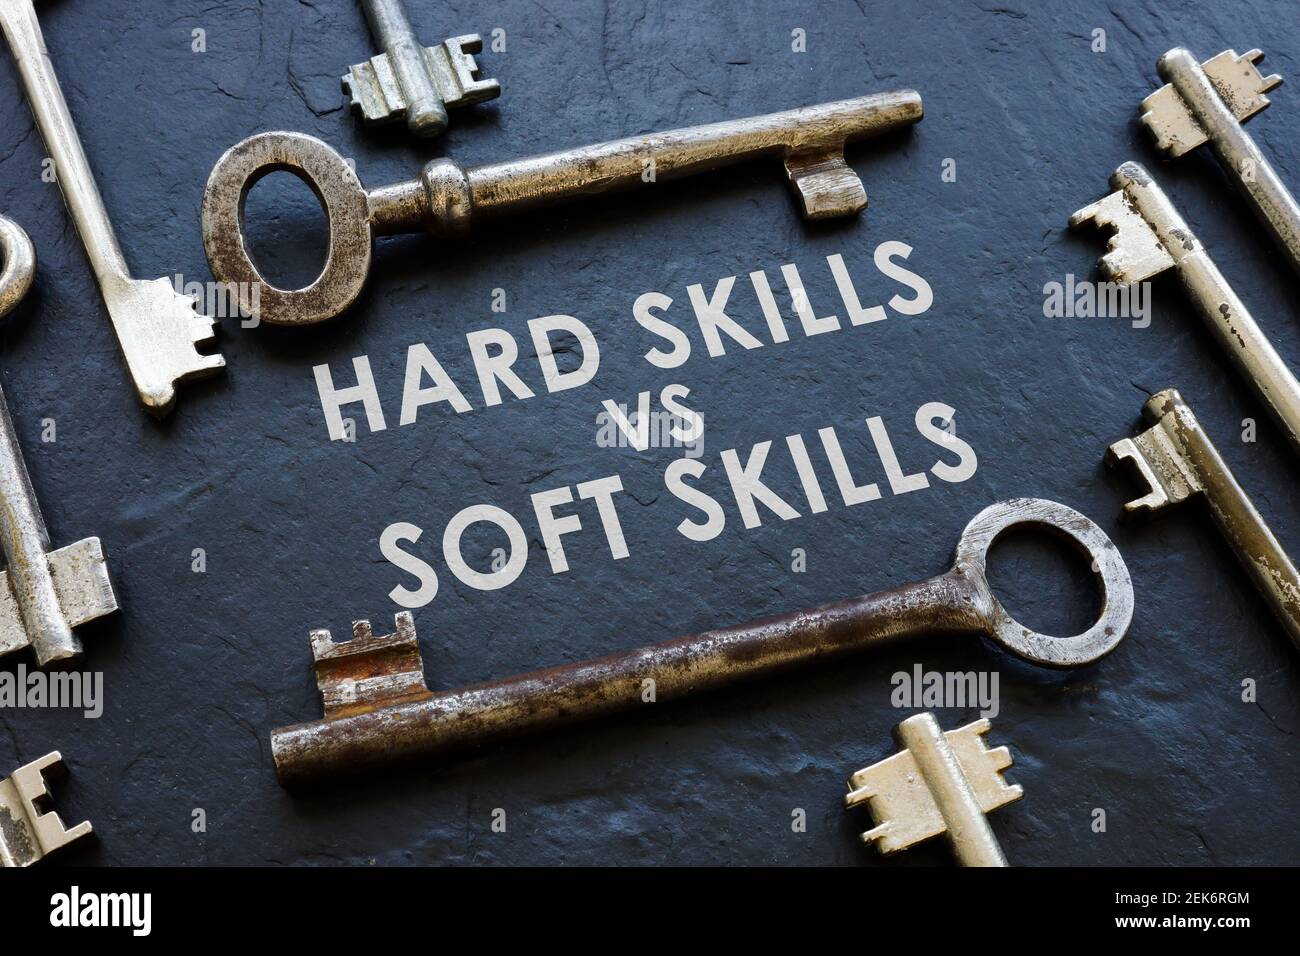 Hard skills vs soft skills and old metal keys. Stock Photo